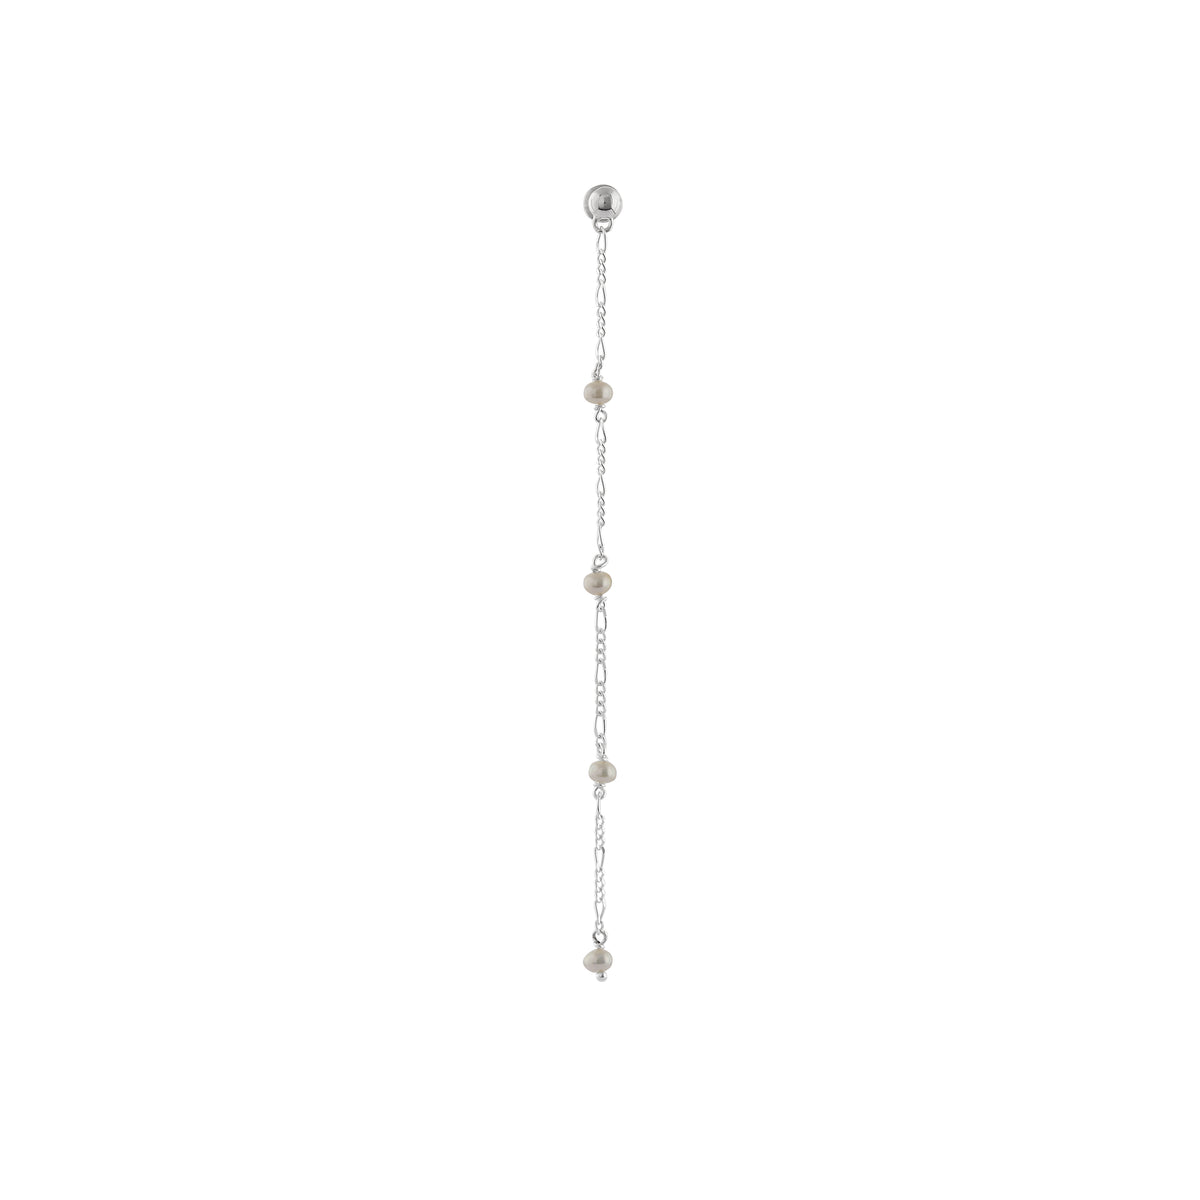 VIKA jewels pearls pearl Perle Ohrringe Earrings chain handmade statement sustainable ethical bali berlin nachhaltig